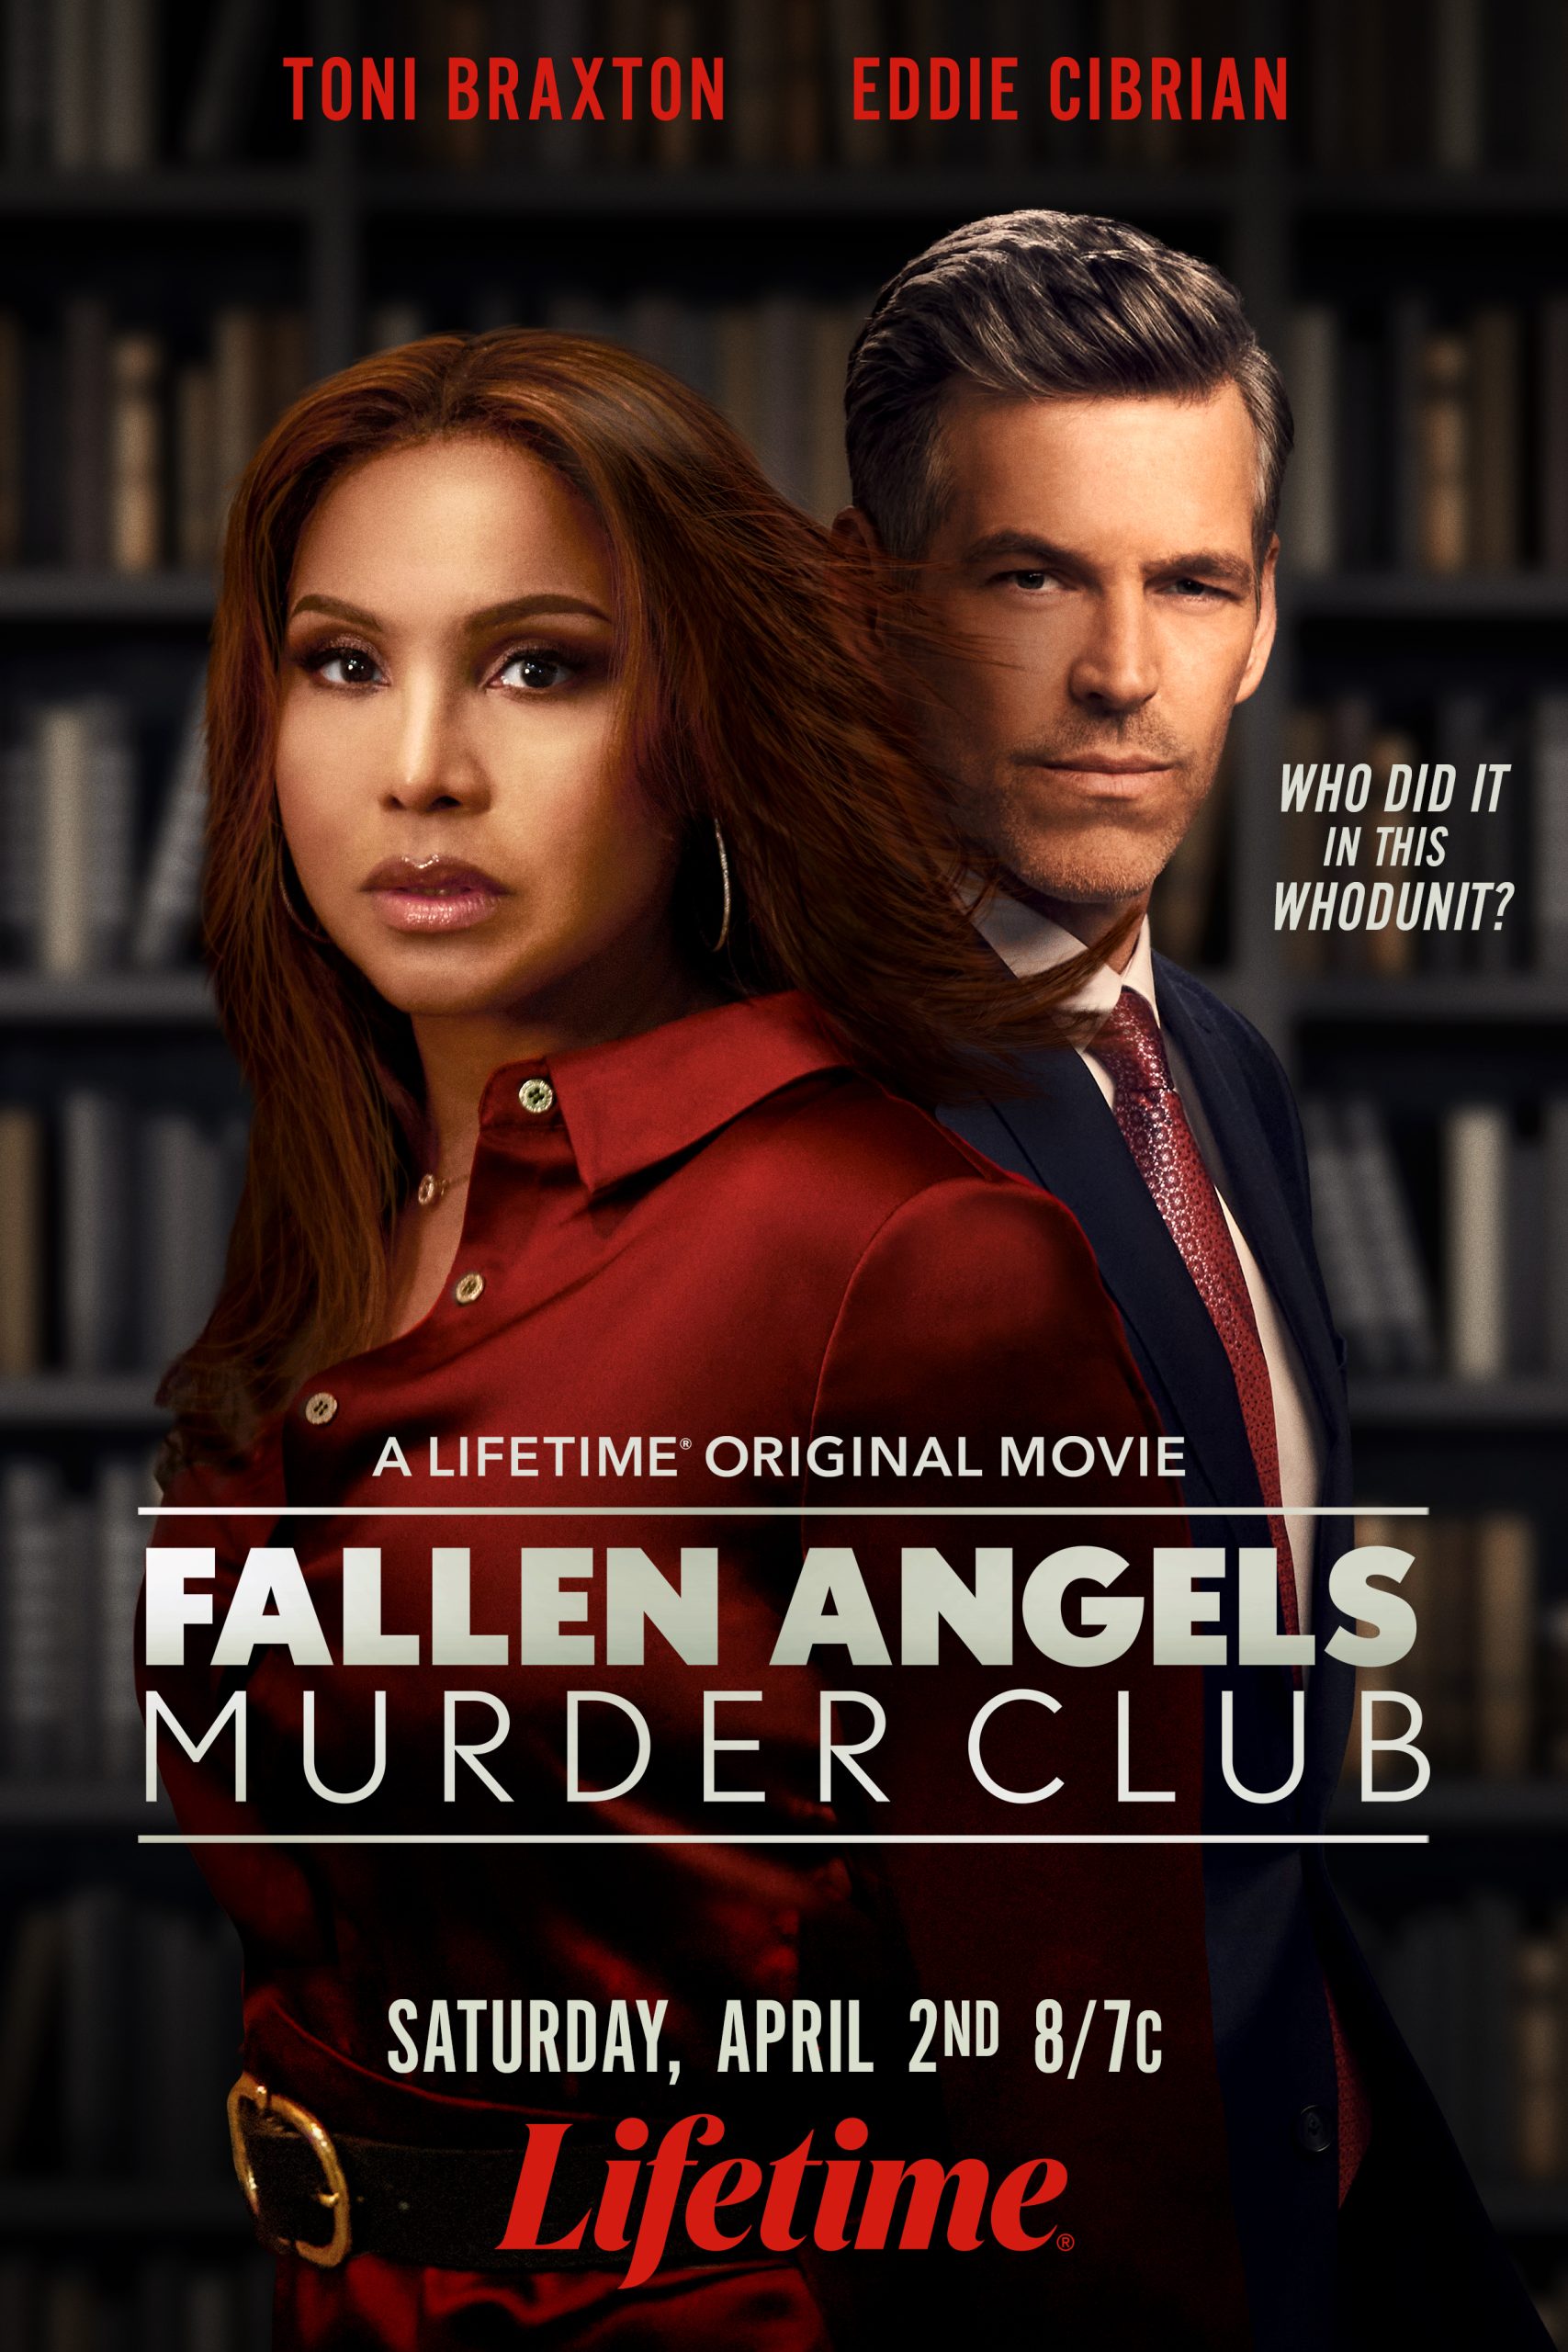 New Movie: Lifetime’s ‘Fallen Angels Murder Club’ Starring Toni Braxton